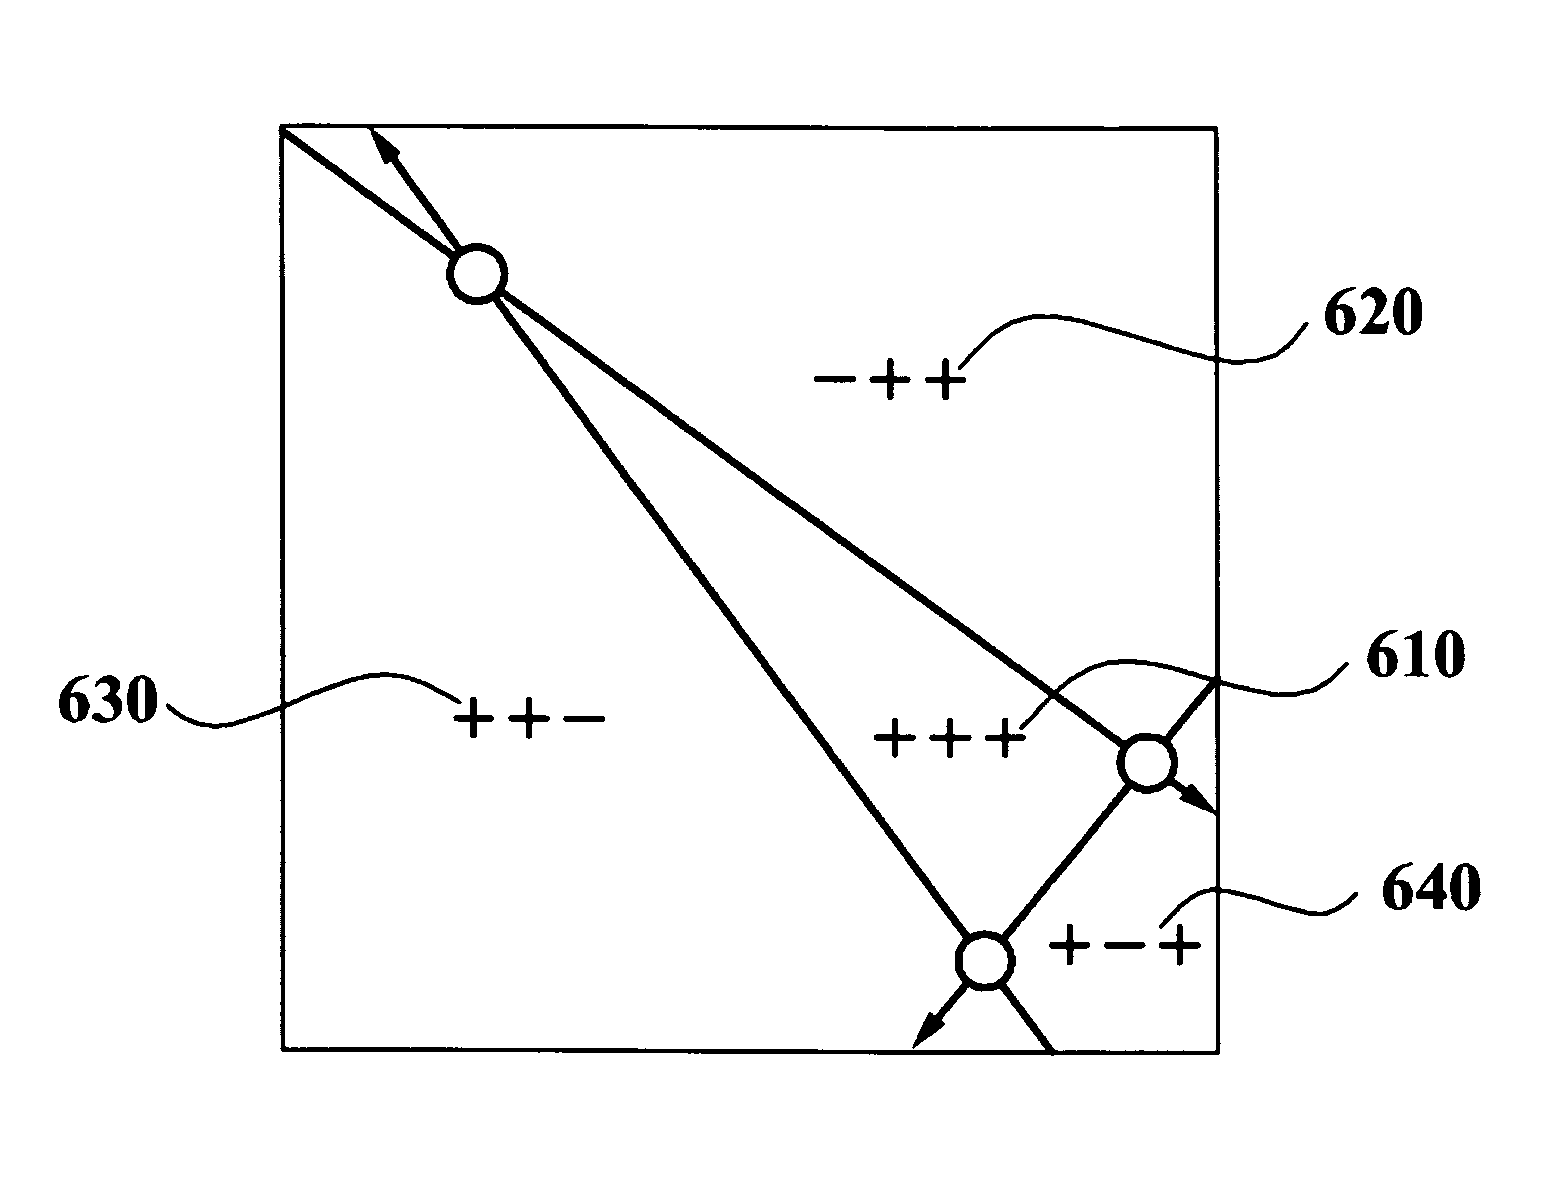 Method and system for tile binning using half-plane edge function